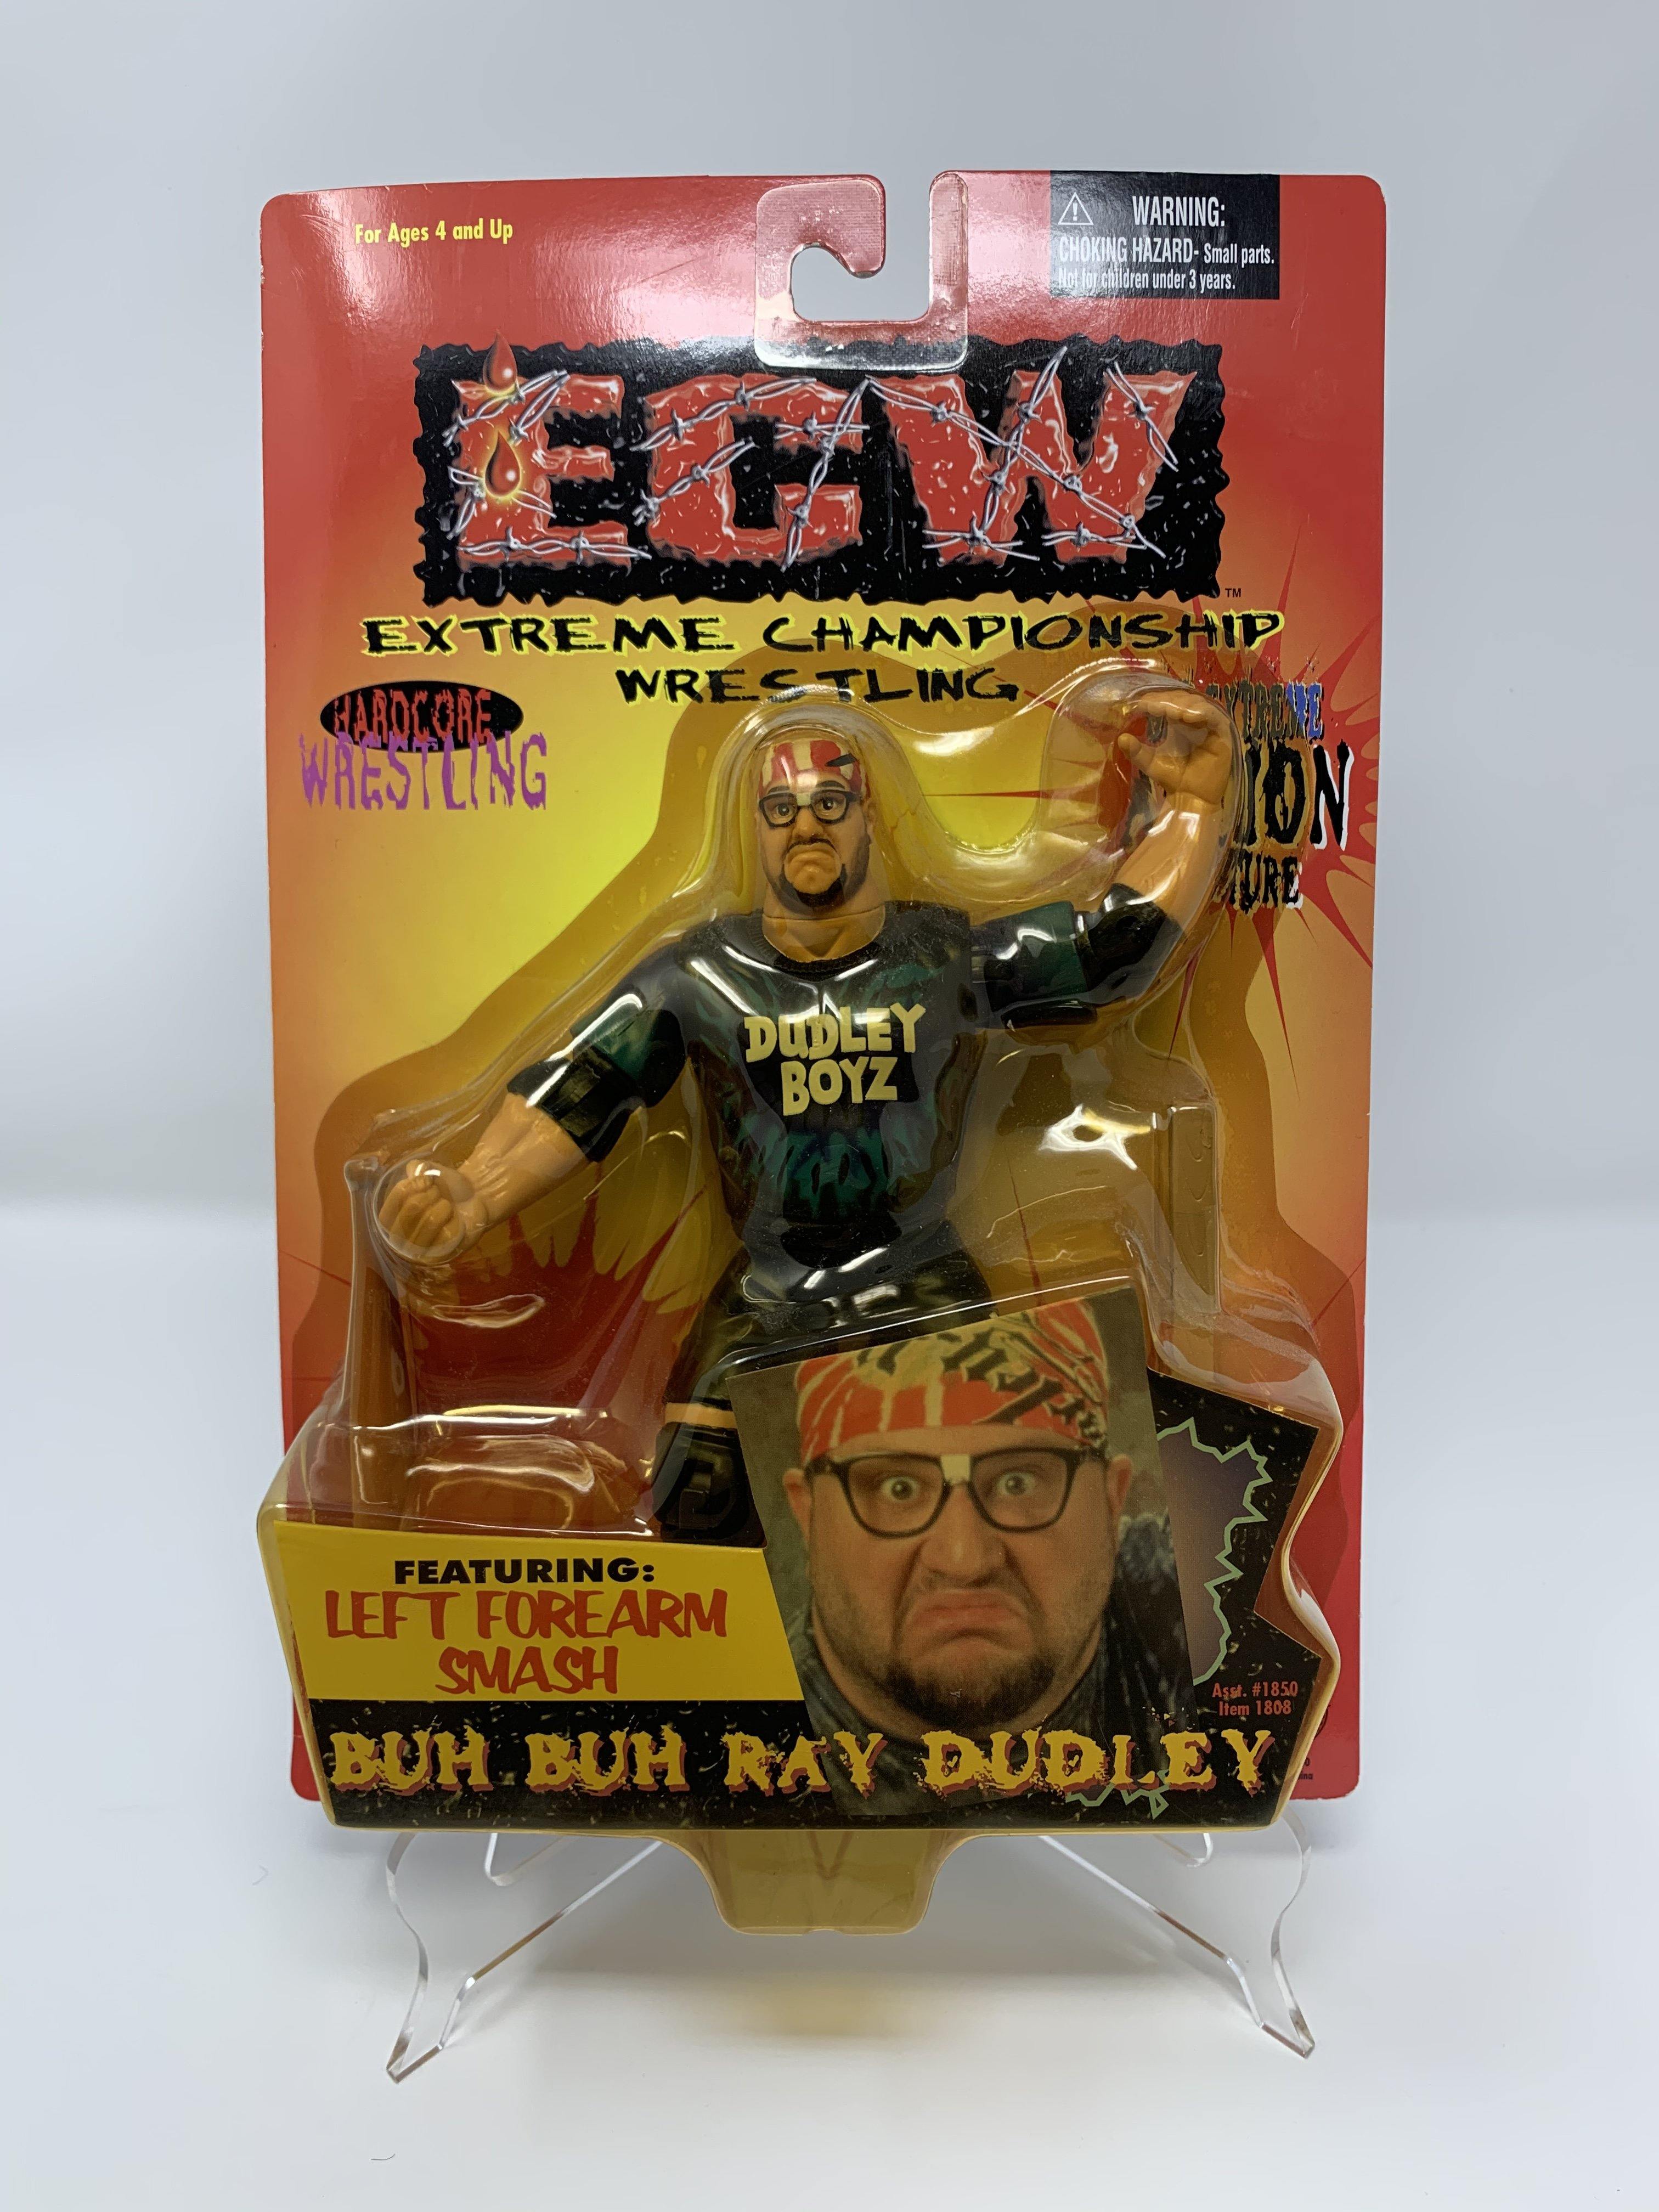 Buh Buh Ray Dudley of the Dudley Boyz w/ Left Forearm Smash ECW